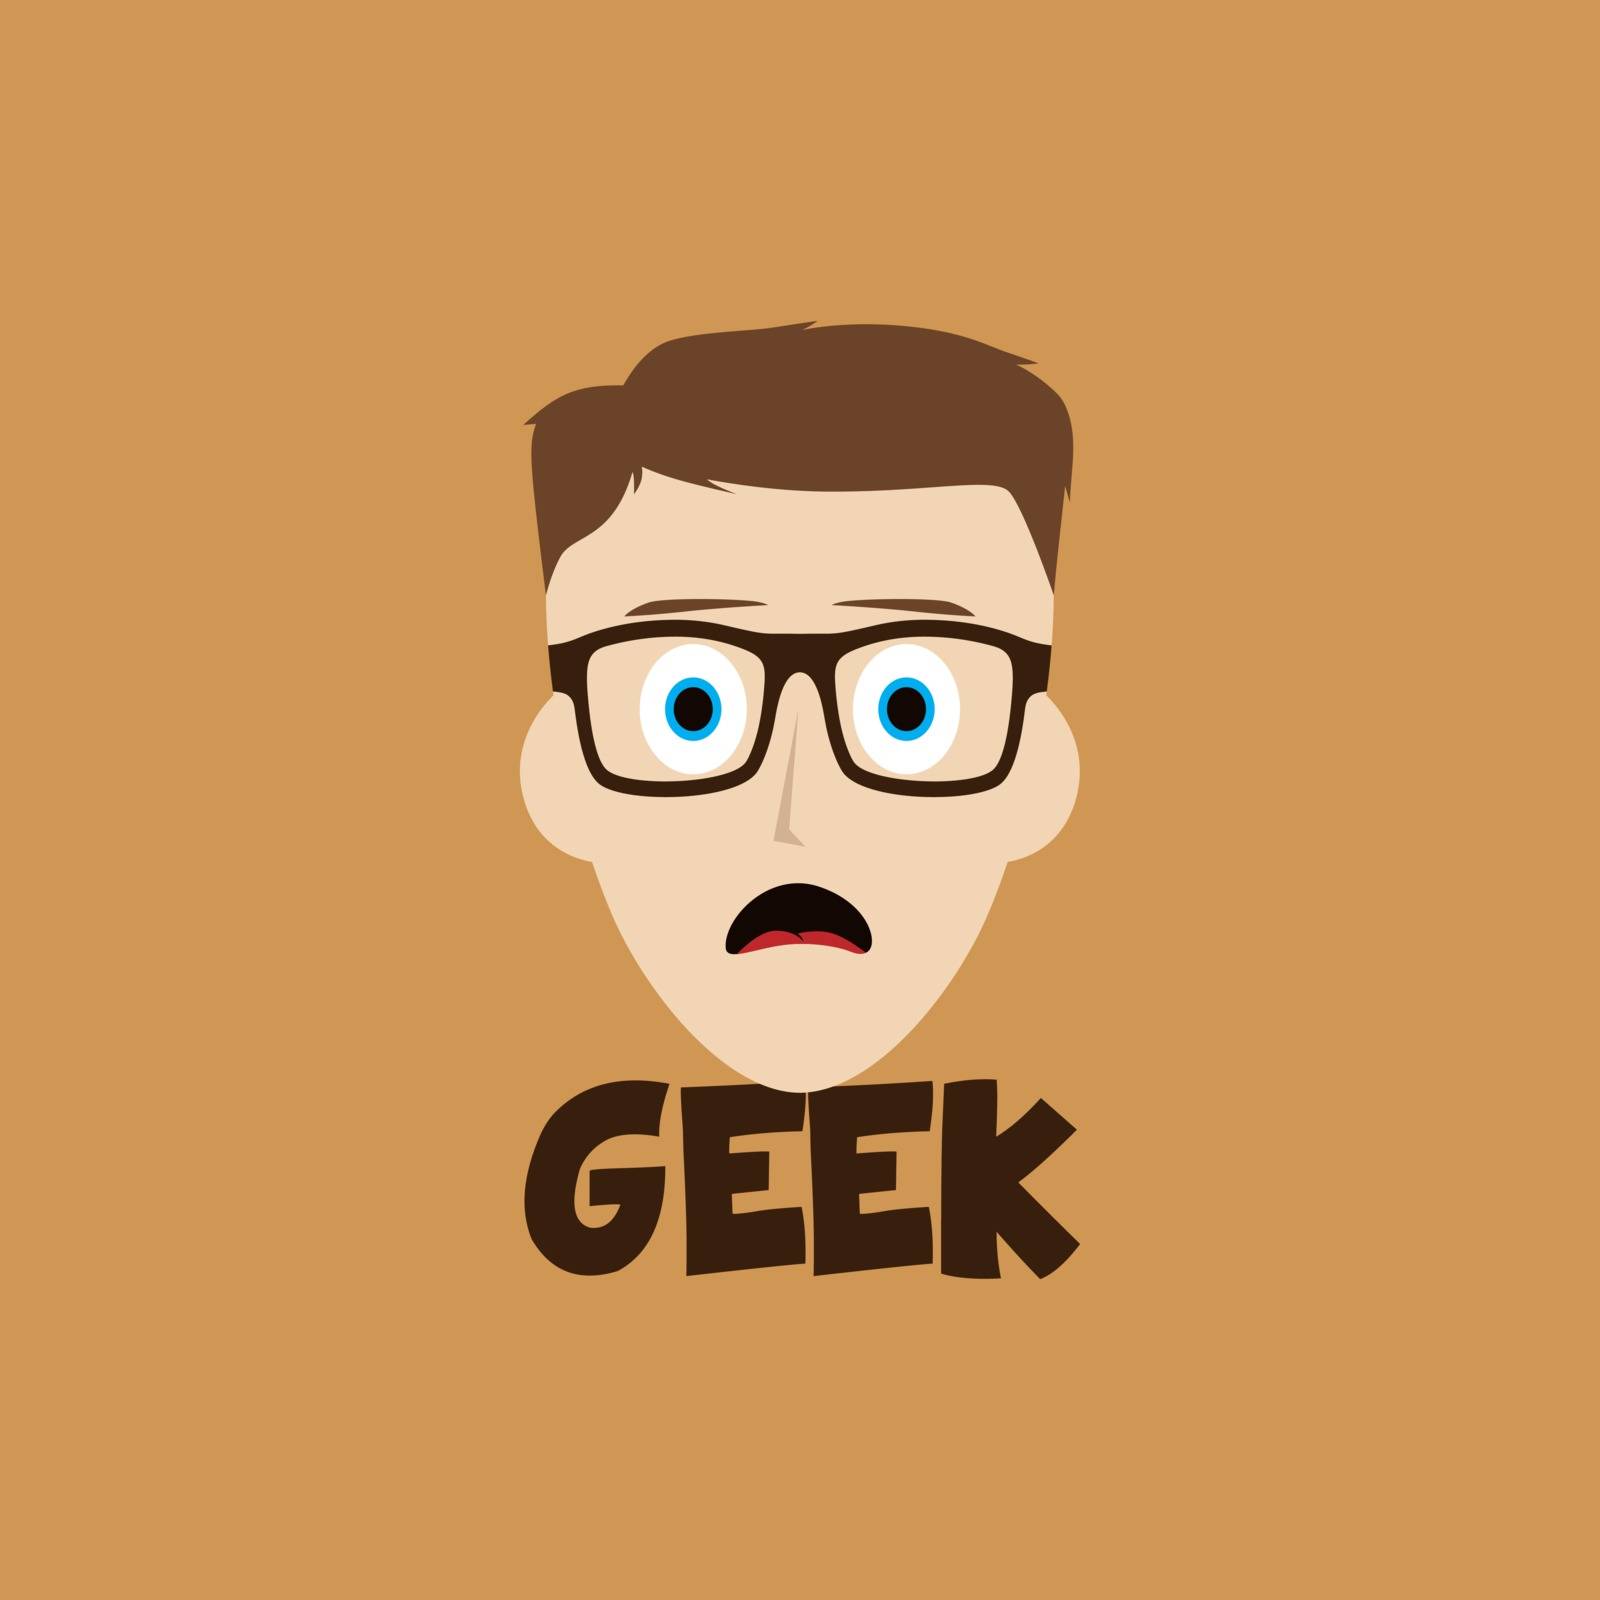 geek guy cartoon face vector art illustration